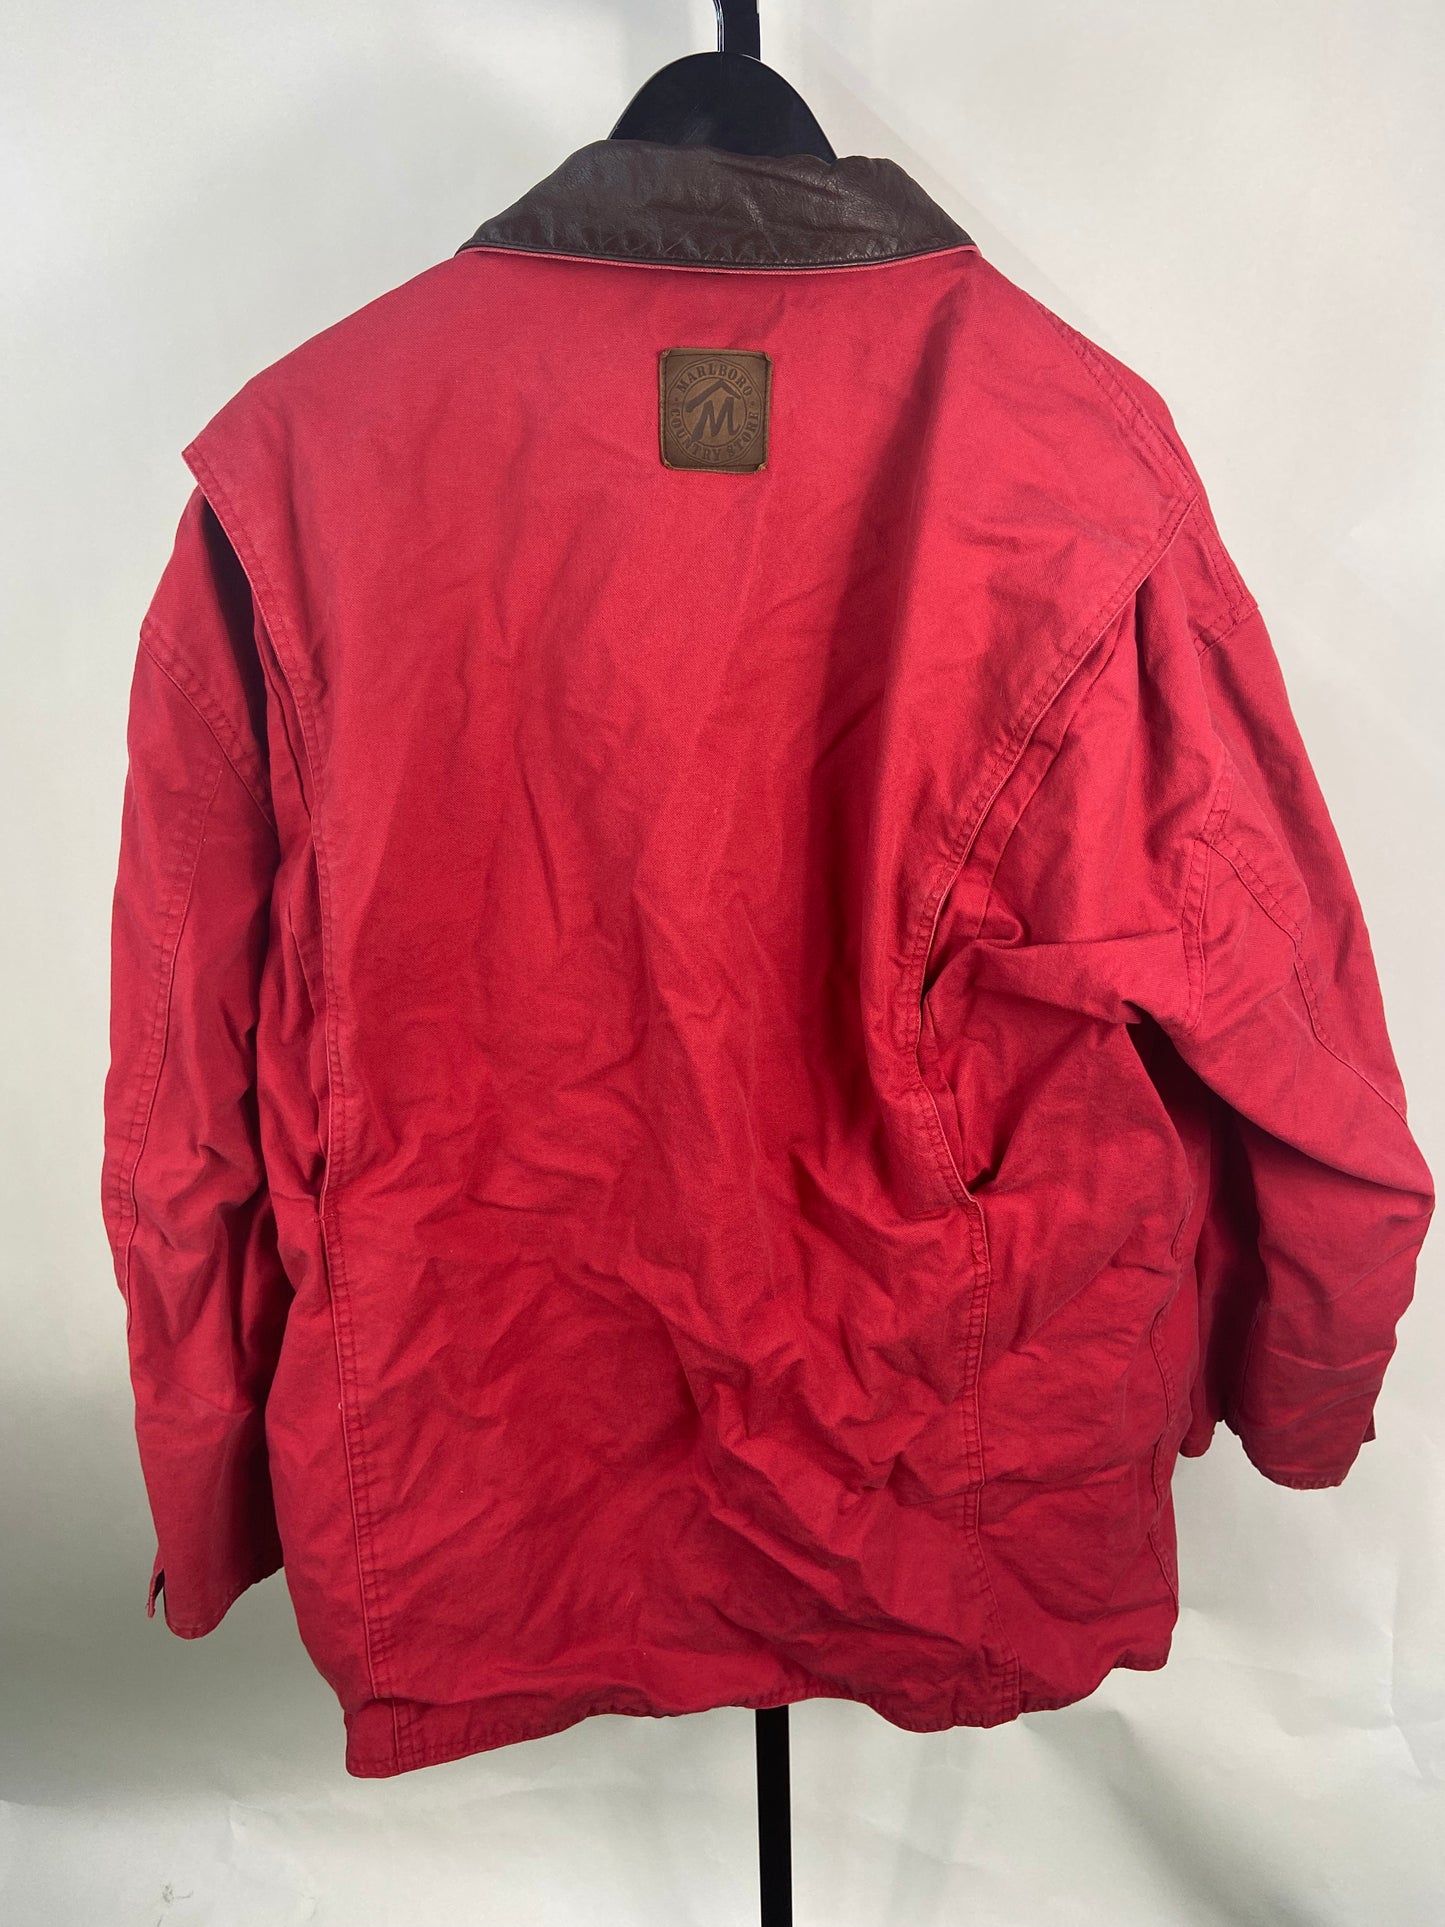 Load image into Gallery viewer, VTG Marlboro Red Chore Jacket Sz XL
